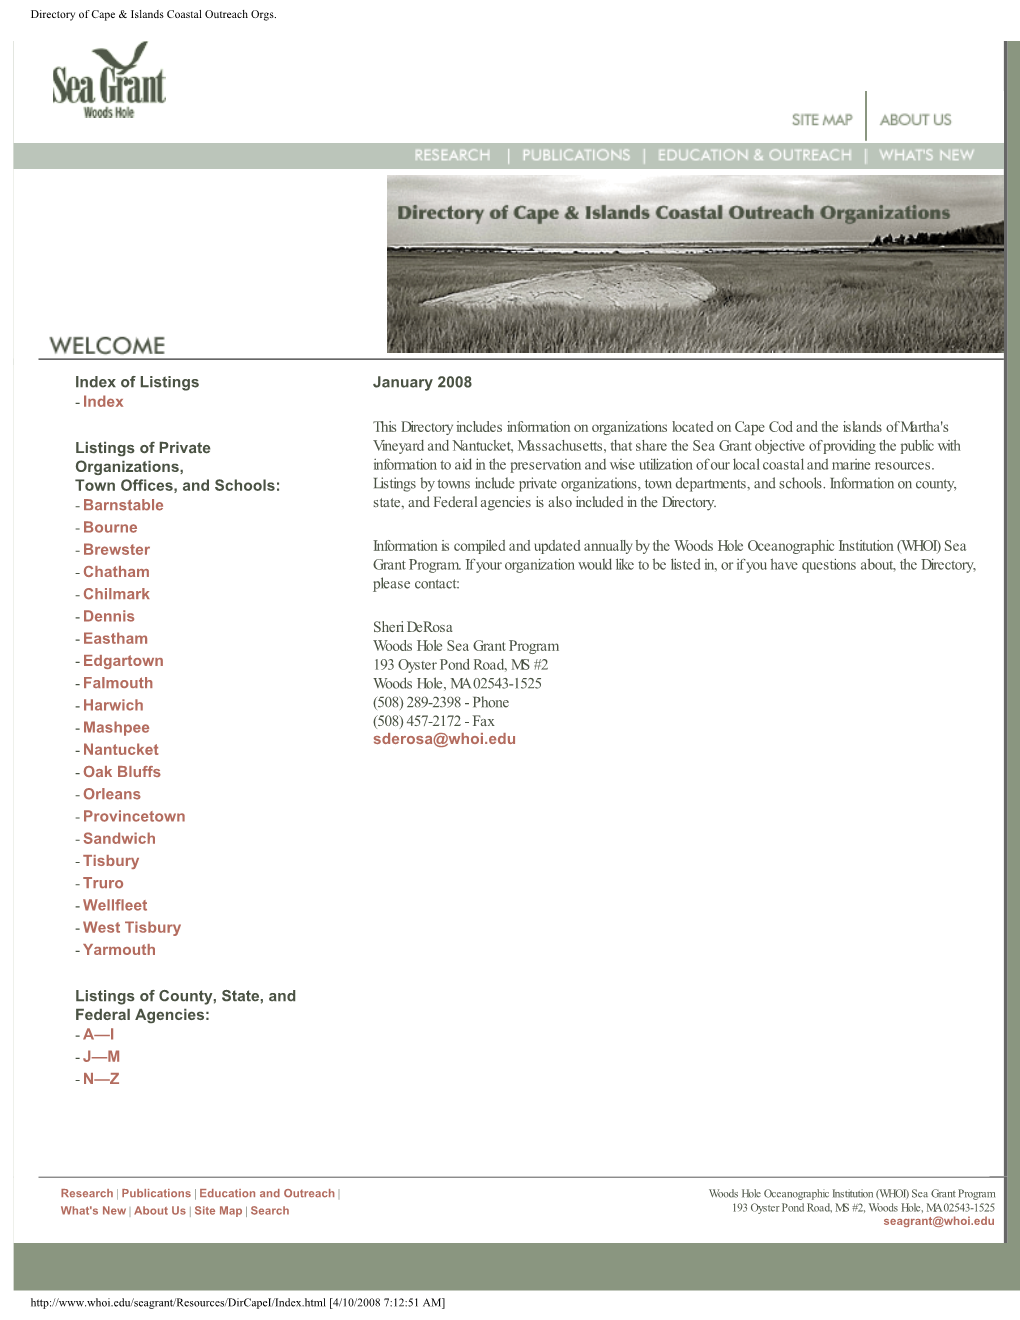 Directory of Cape & Islands Coastal Outreach Orgs